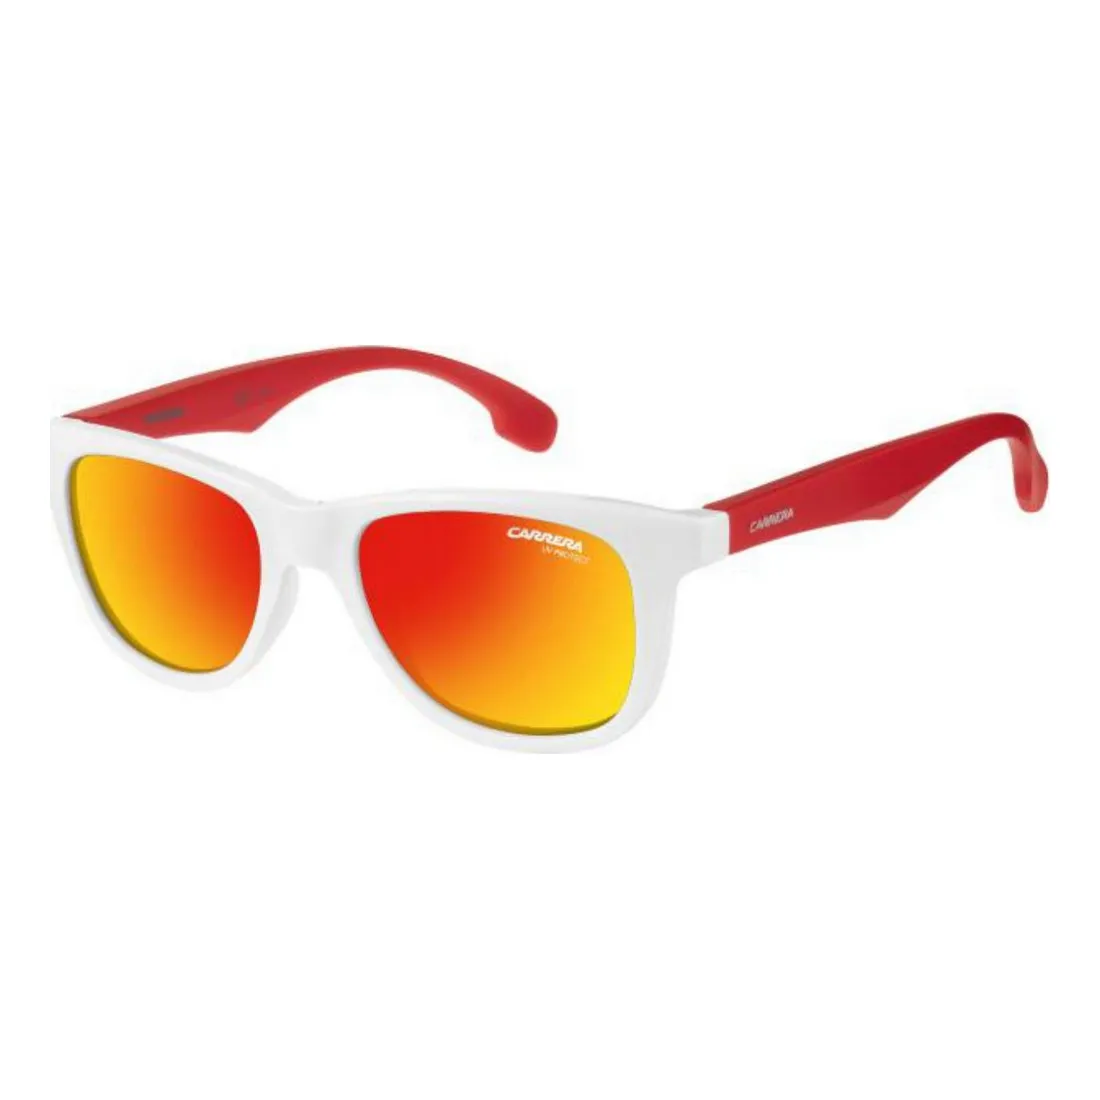 Sonnenbrille Kinder Carrera 20-5SK46UZ Wei� � 46 mm Rot UV400